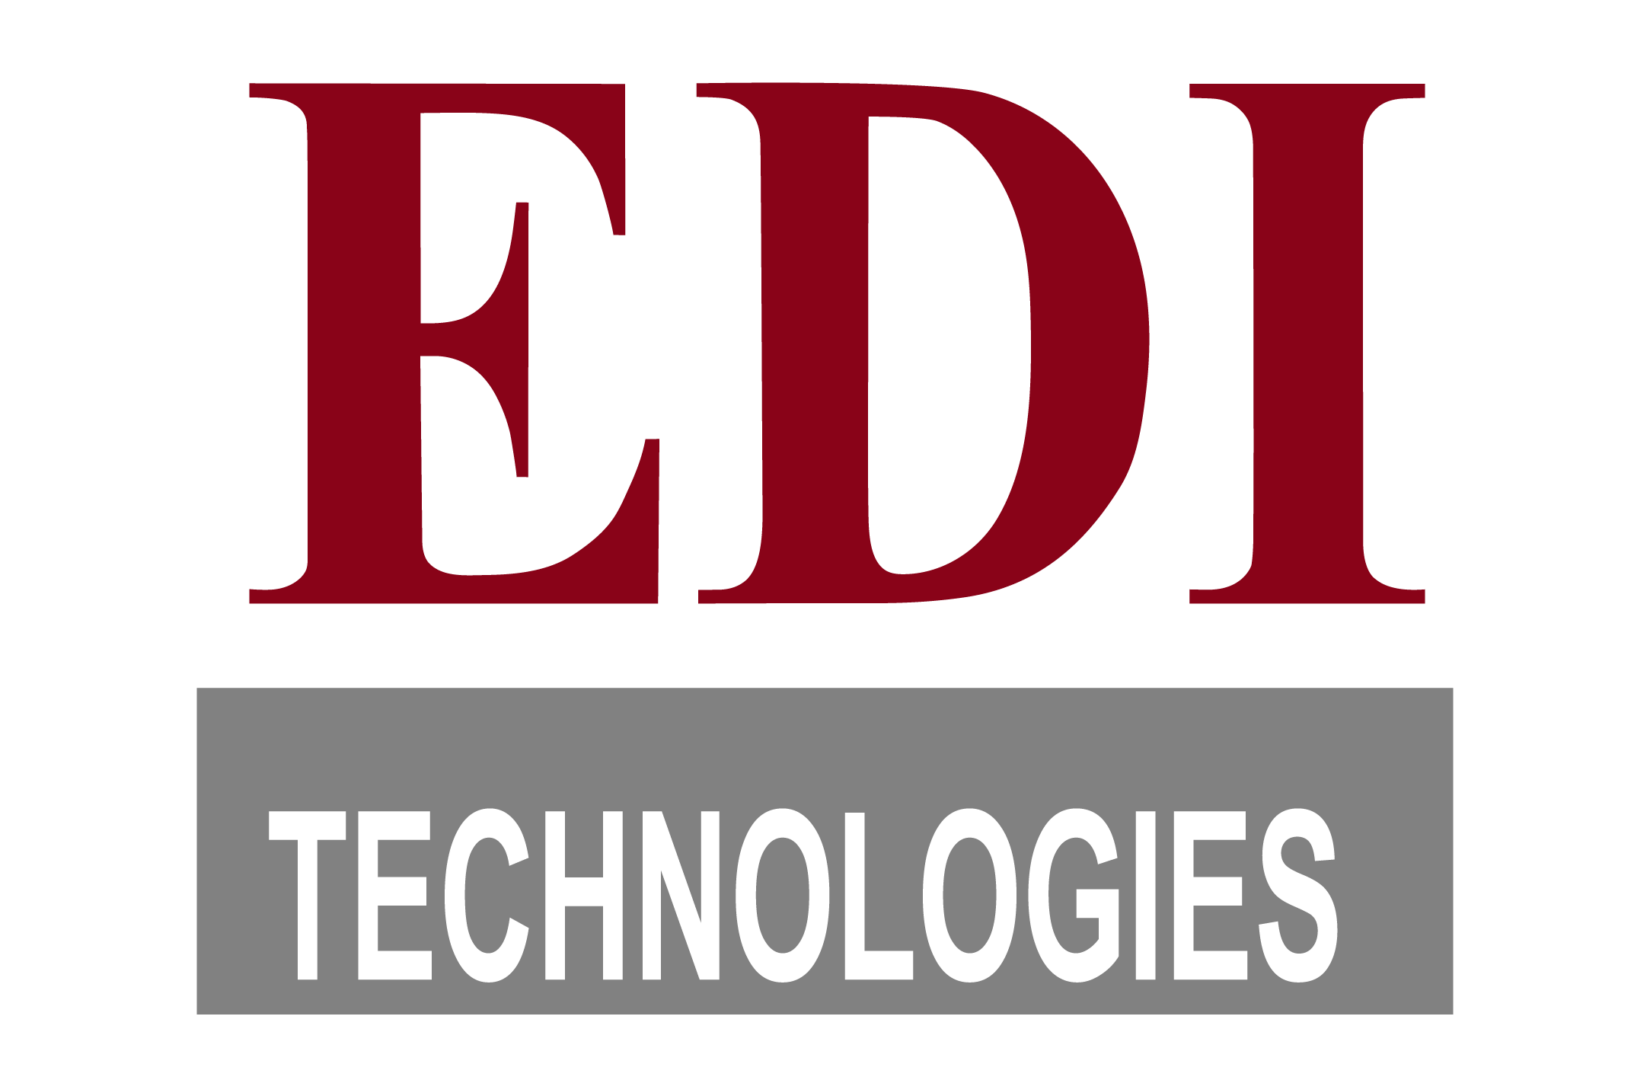 EDI Technologies logo